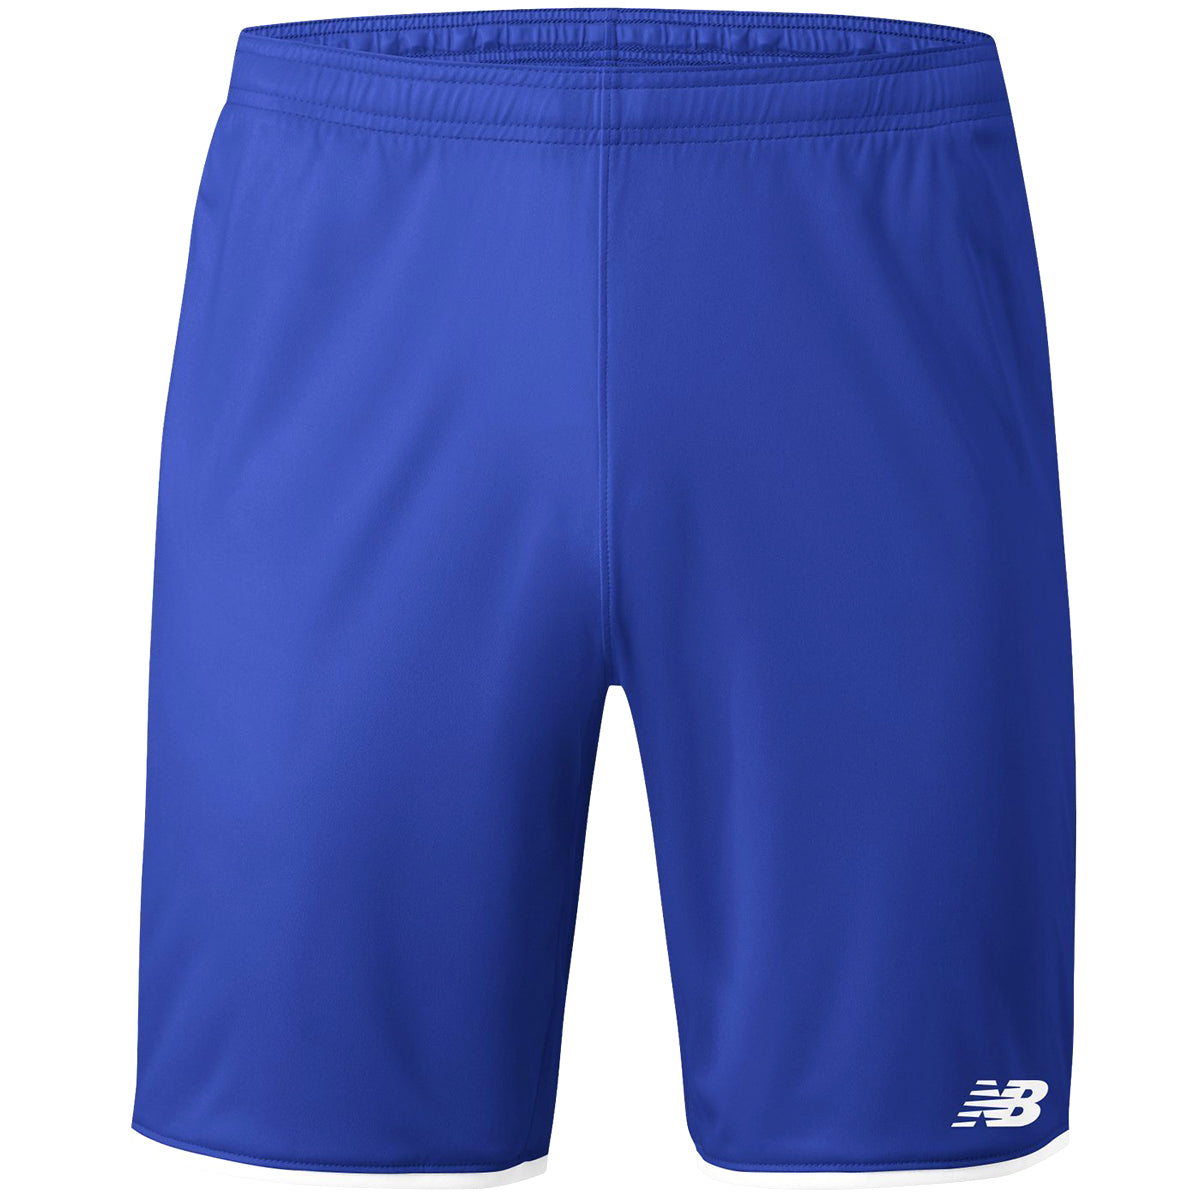 NWISC 2021 Men's Team Short - Bold Blue by Goal Kick Soccer